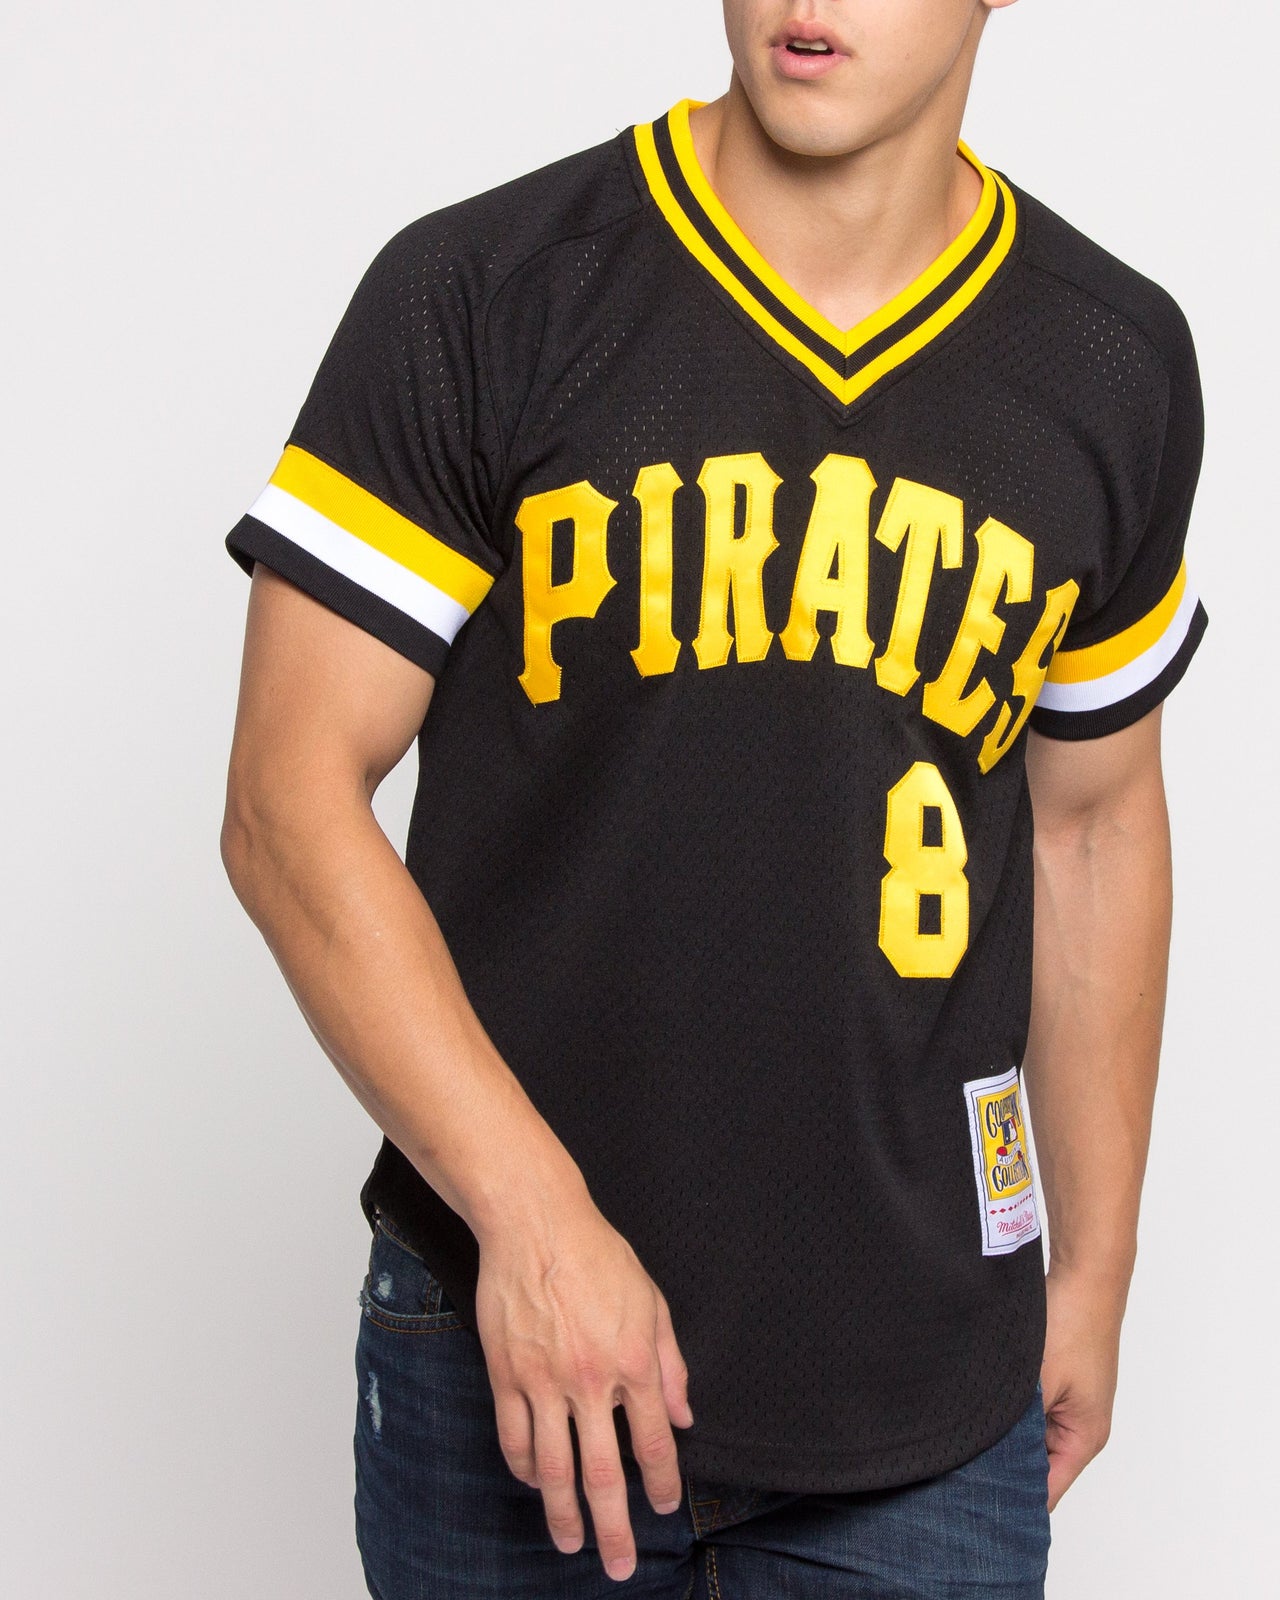 Willie Stargell Pittsburgh Pirates Jersey